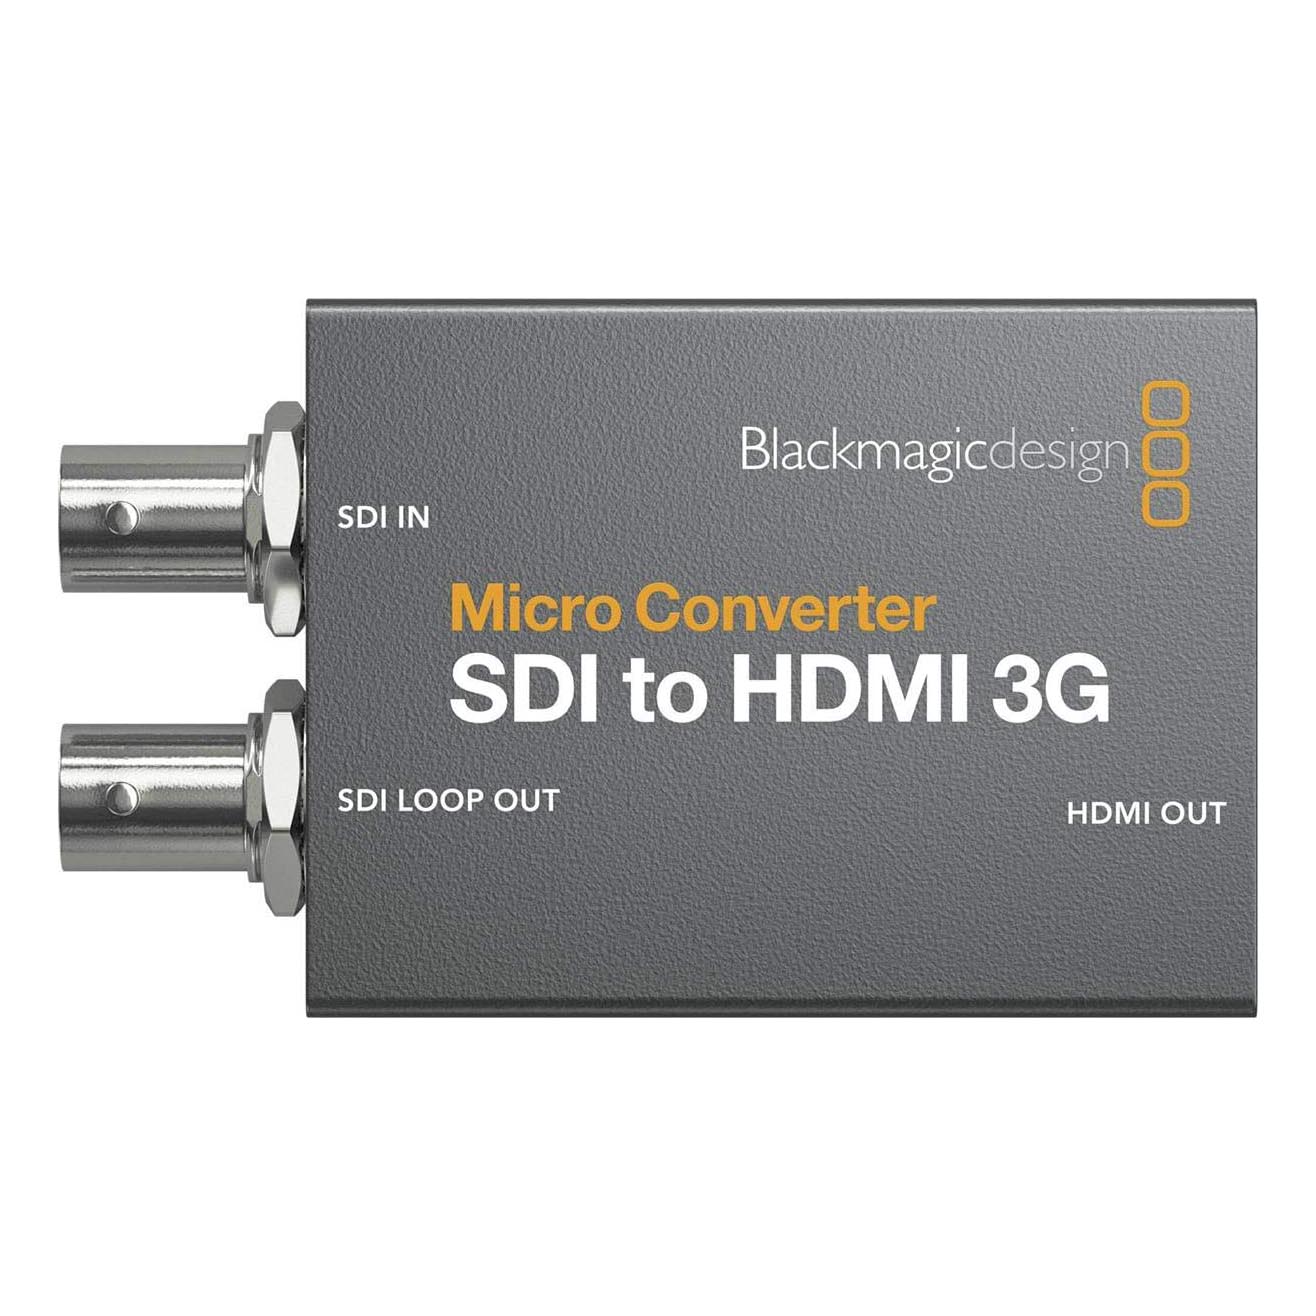 Конвертер Blackmagic Design Micro Converter SDI to HDMI 3G PSU конвертер ugreen cm101 40744 hdmi to vga hdmi converter черный